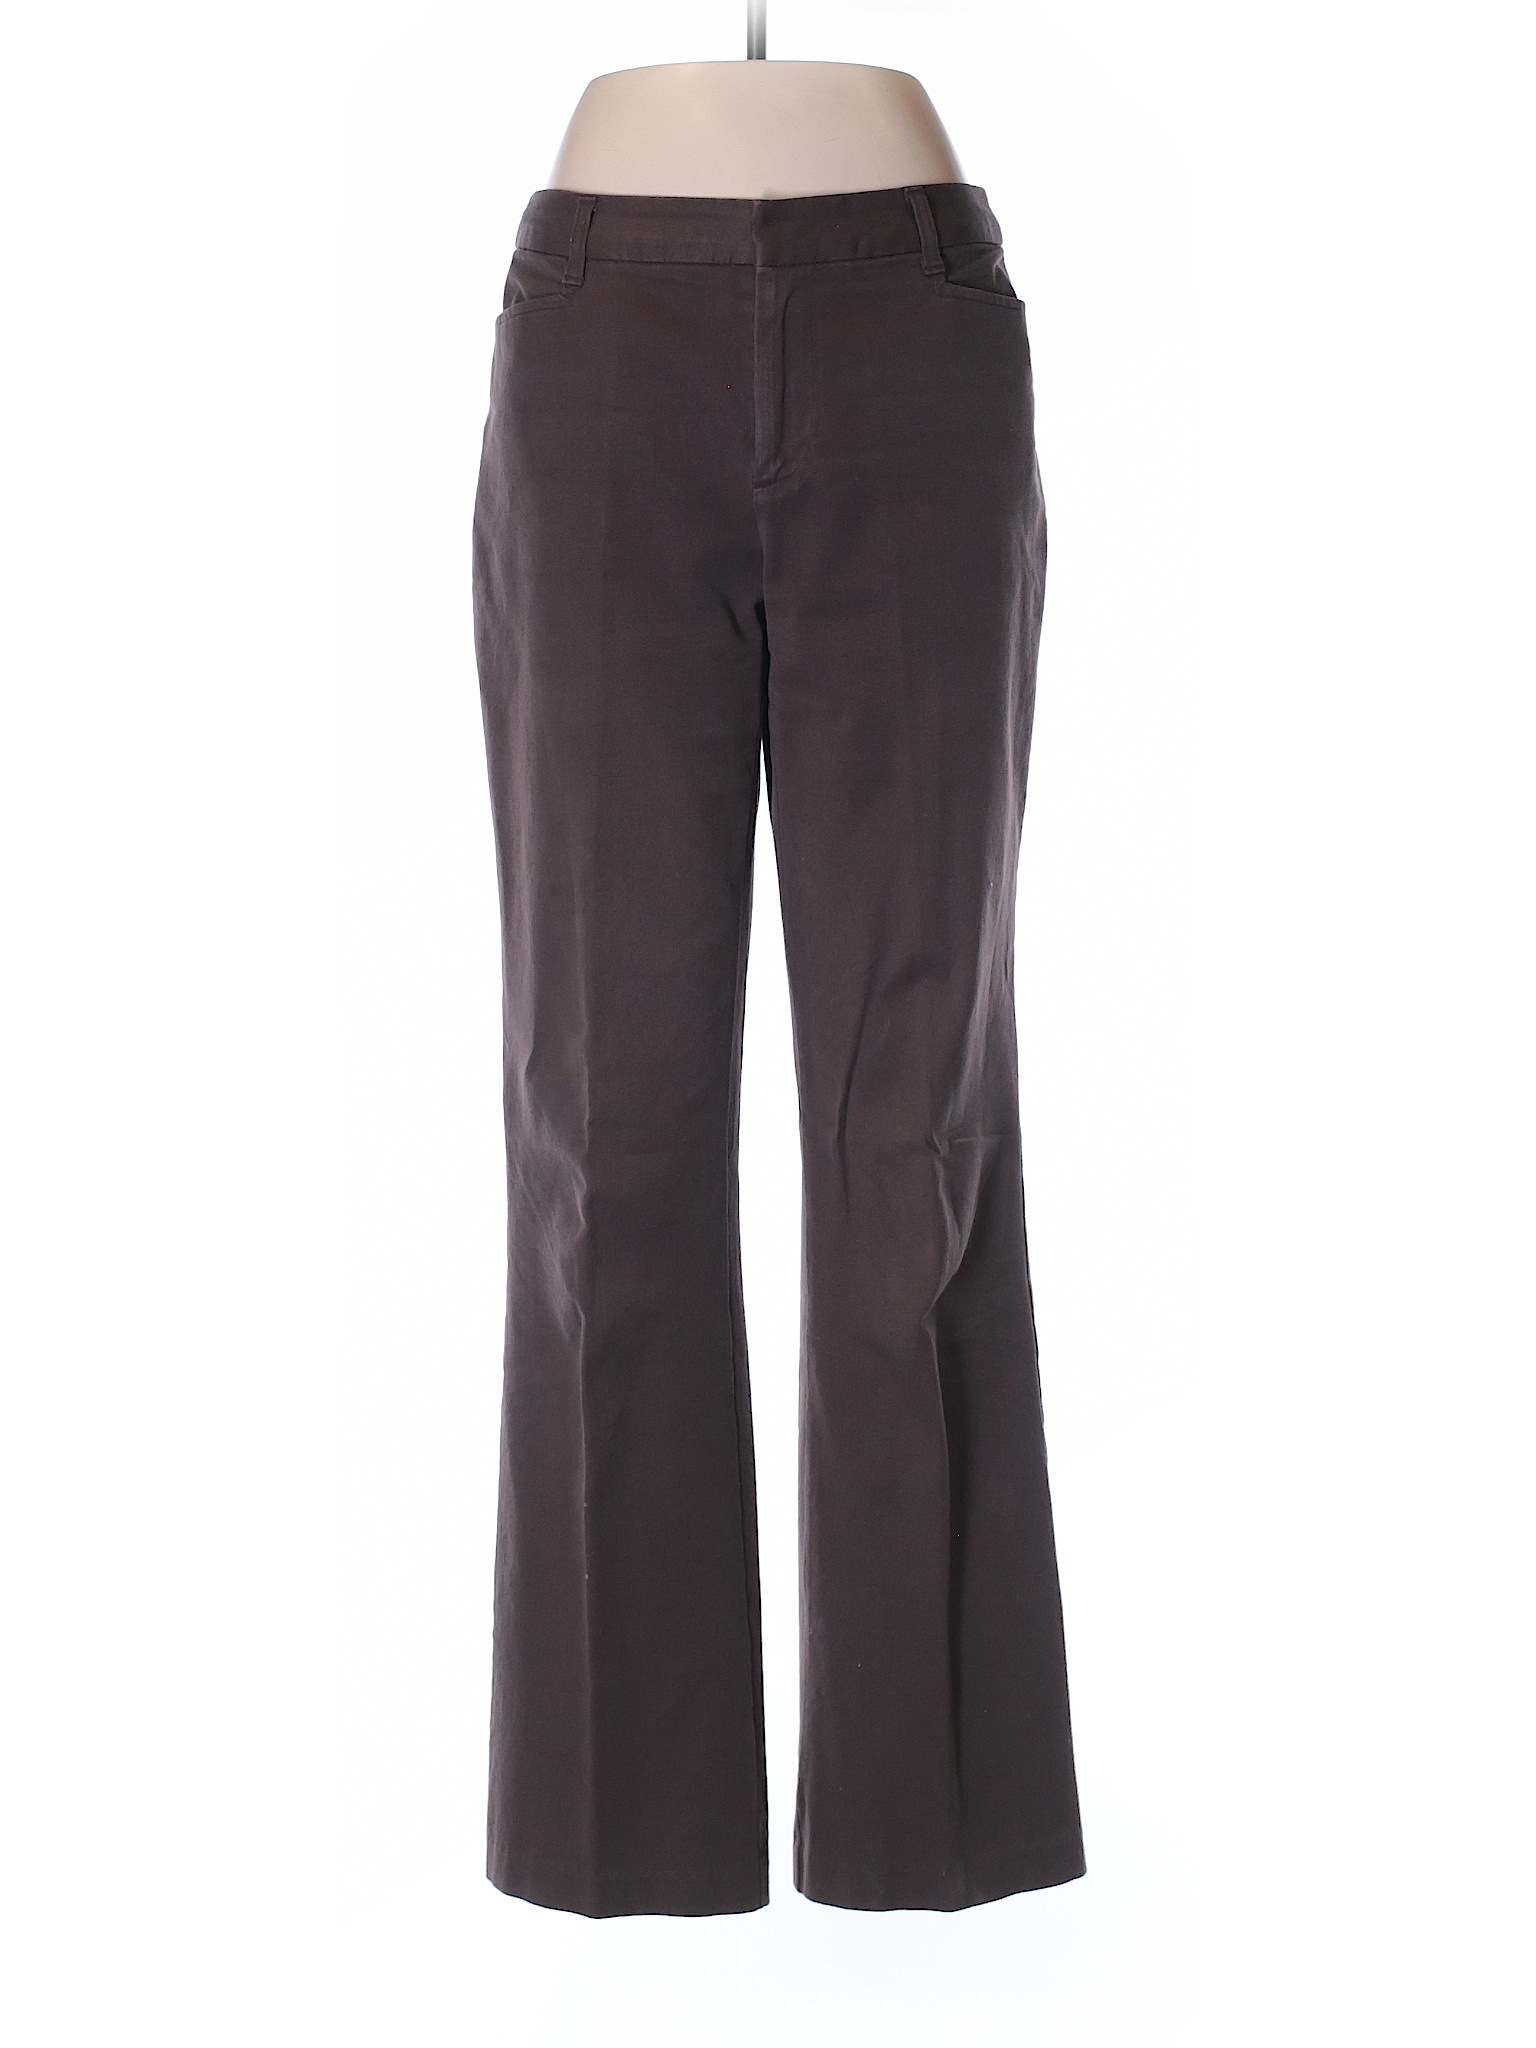 St. John's Bay Solid Brown Dress Pants Size 8 - 72% off | thredUP